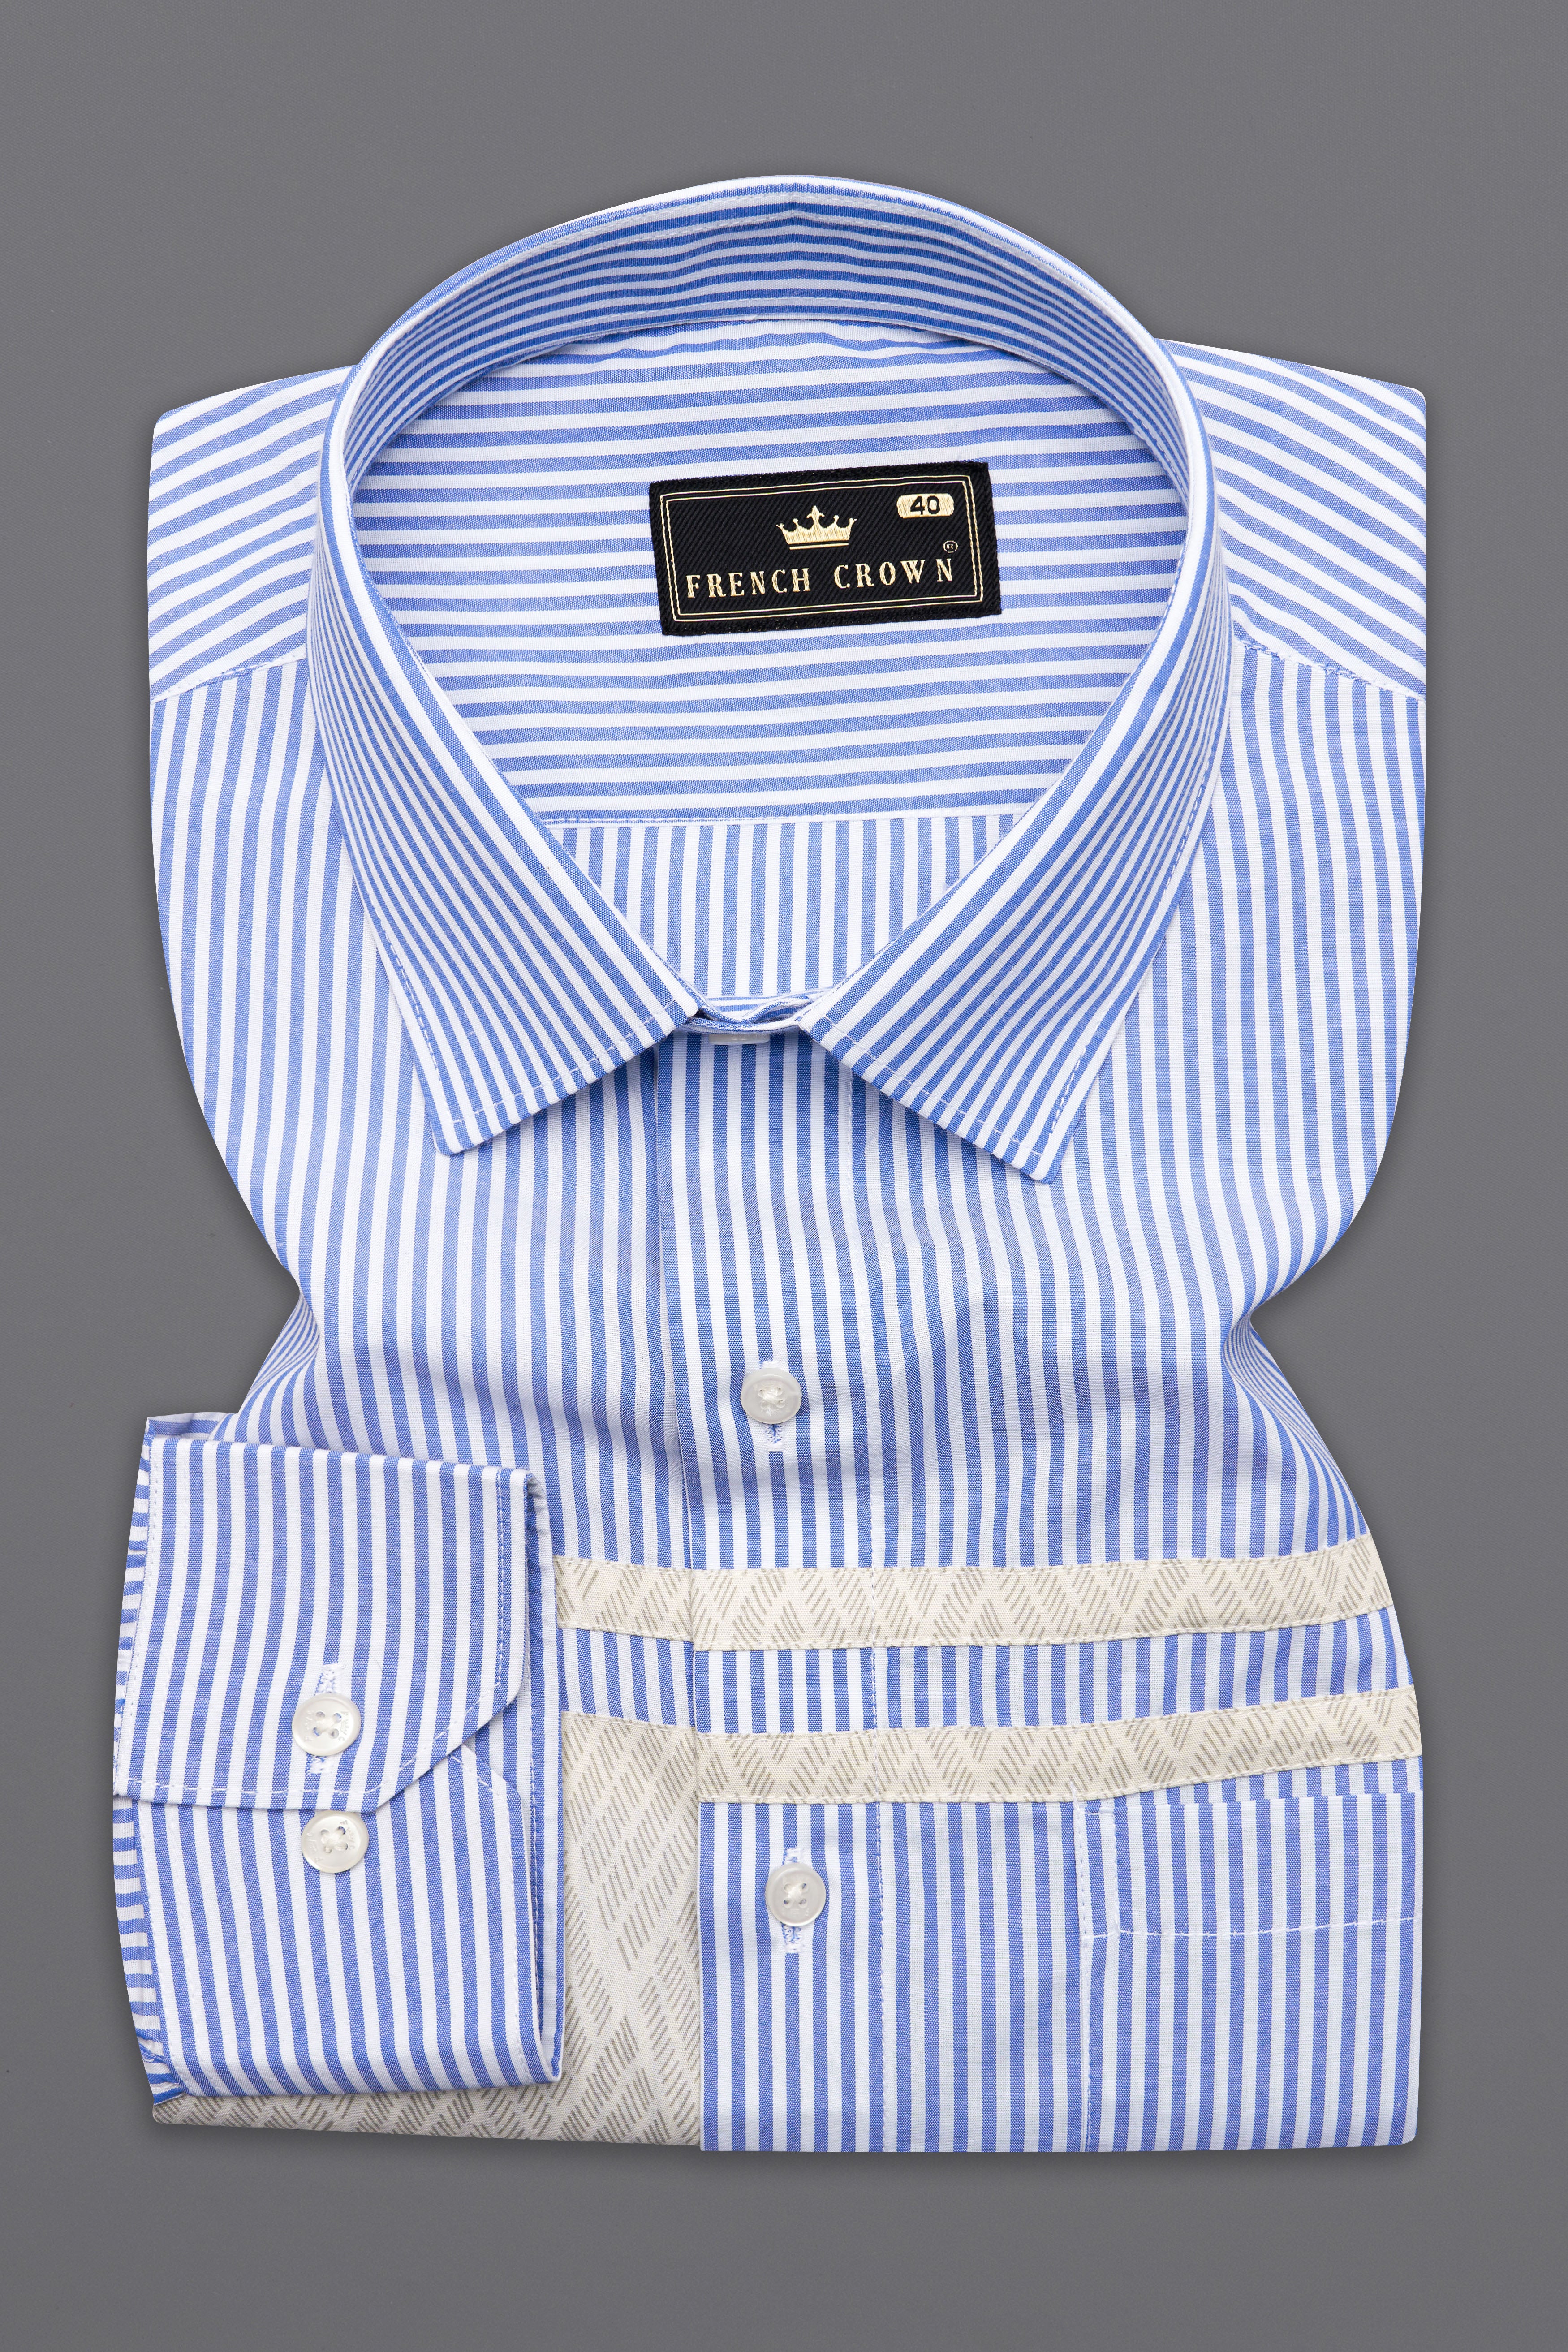  Glaucous Blue and White Striped Premium Cotton Designer Shirt 10152-P8-38, 10152-P8-H-38, 10152-P8-39, 10152-P8-H-39, 10152-P8-40, 10152-P8-H-40, 10152-P8-42, 10152-P8-H-42, 10152-P8-44, 10152-P8-H-44, 10152-P8-46, 10152-P8-H-46, 10152-P8-48, 10152-P8-H-48, 10152-P8-50, 10152-P8-H-50, 10152-P8-52, 10152-P8-H-52